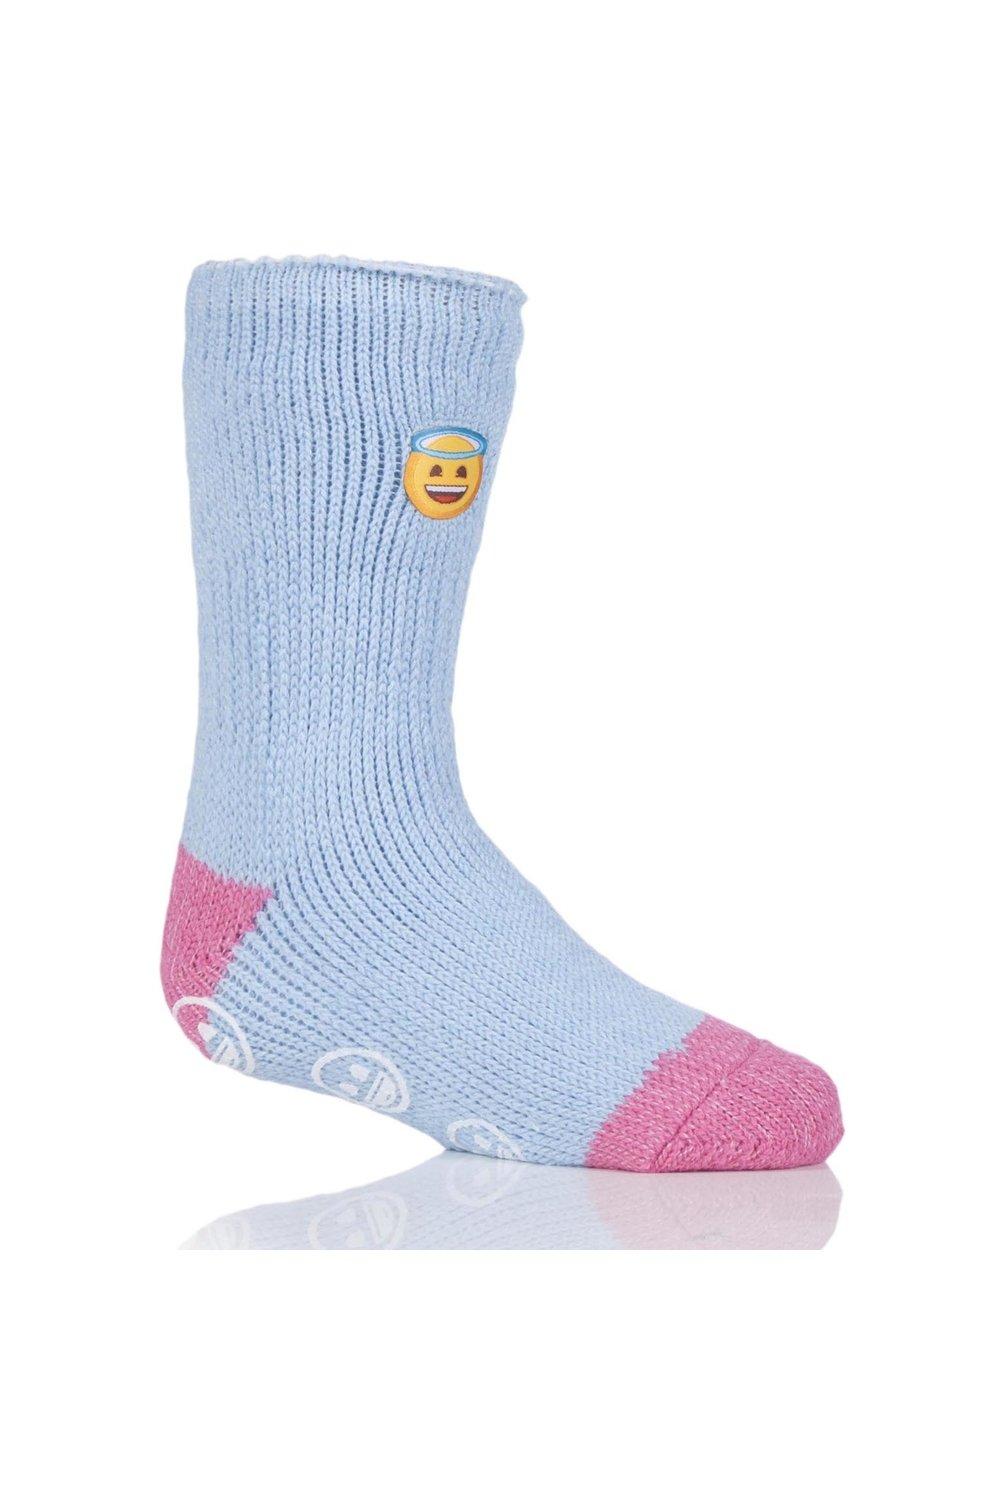 1 Pair Emoji Angel Face Slipper Socks